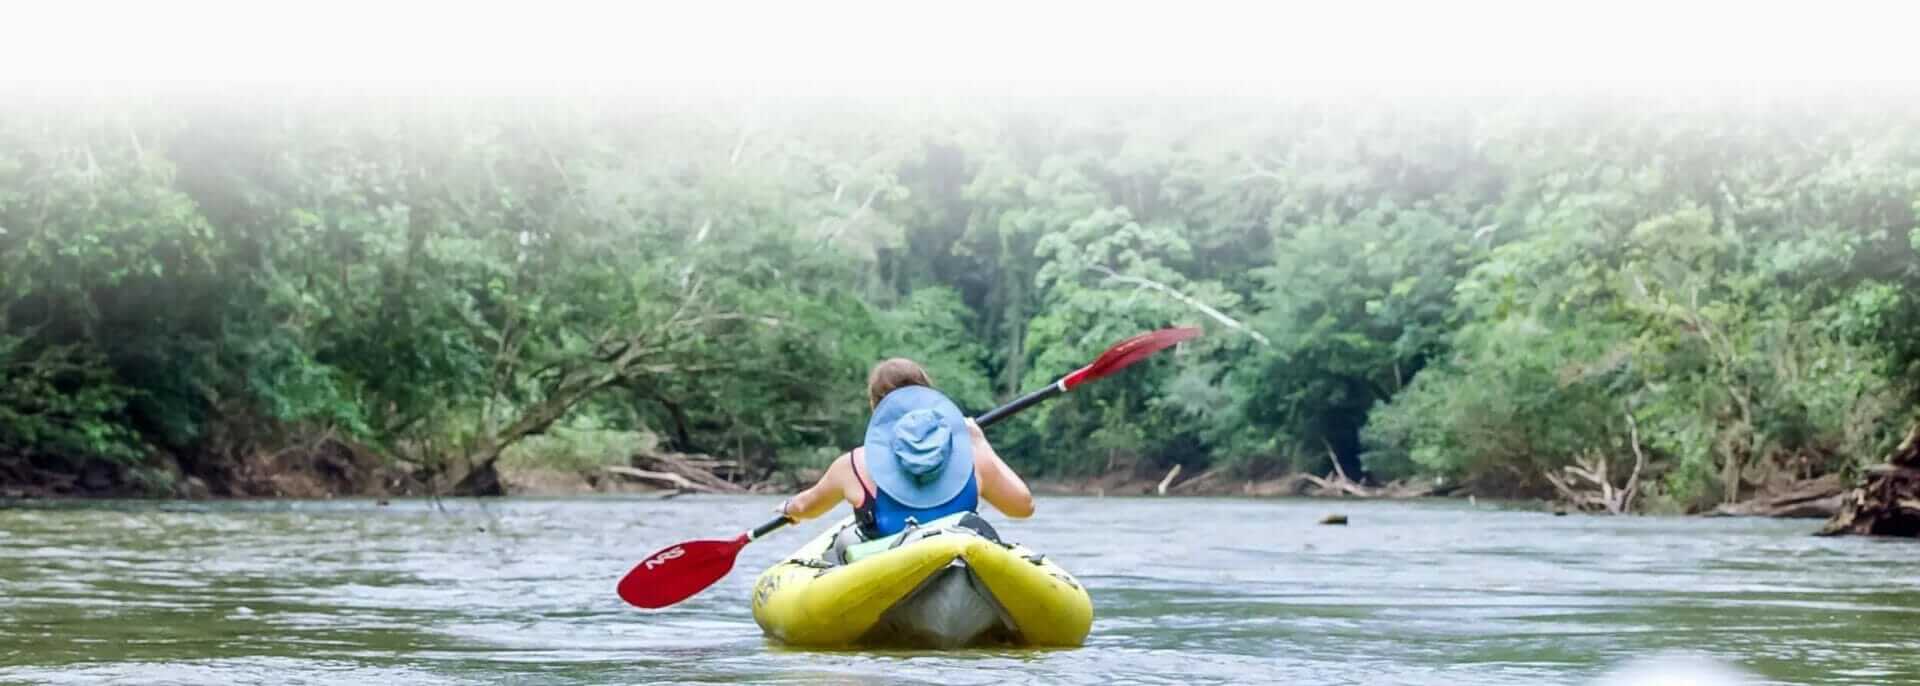 kayaker in ecuador amazon jungle